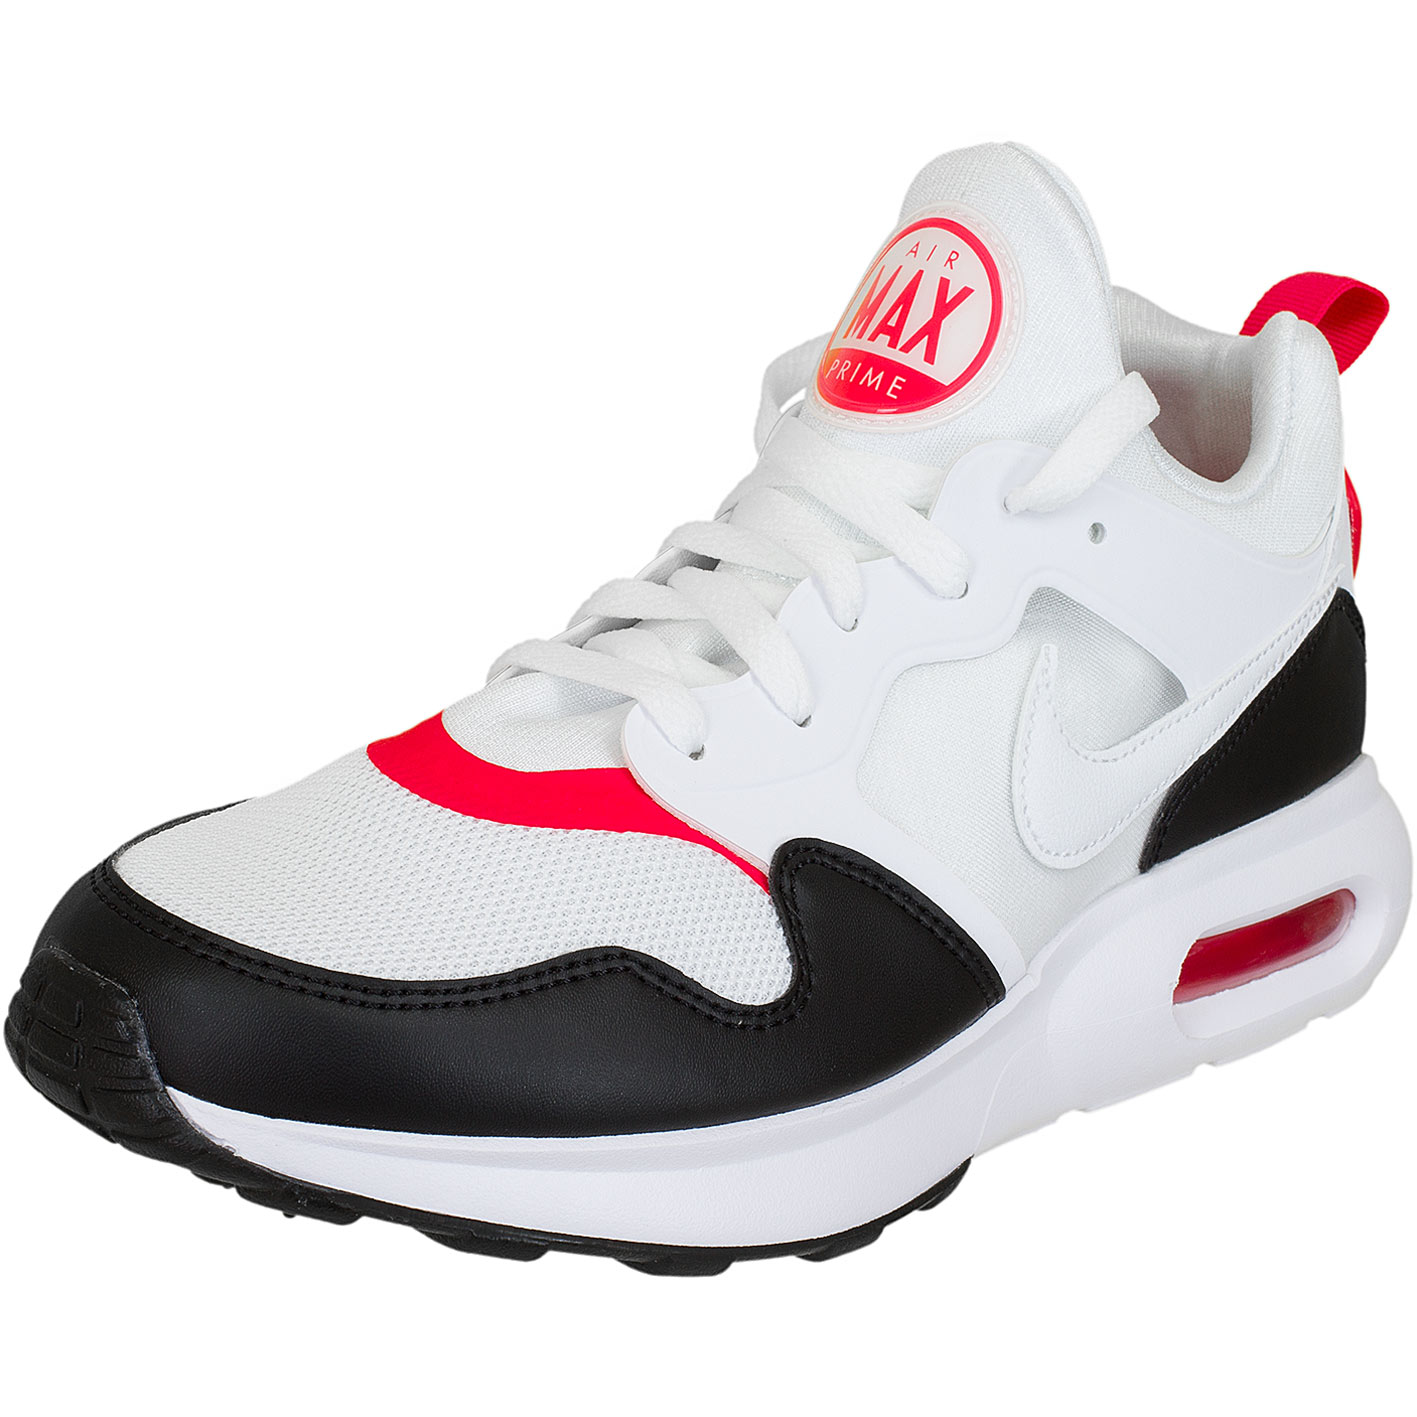 ☆ Nike Sneaker Air Max Prime weiß/schwarz - hier bestellen!